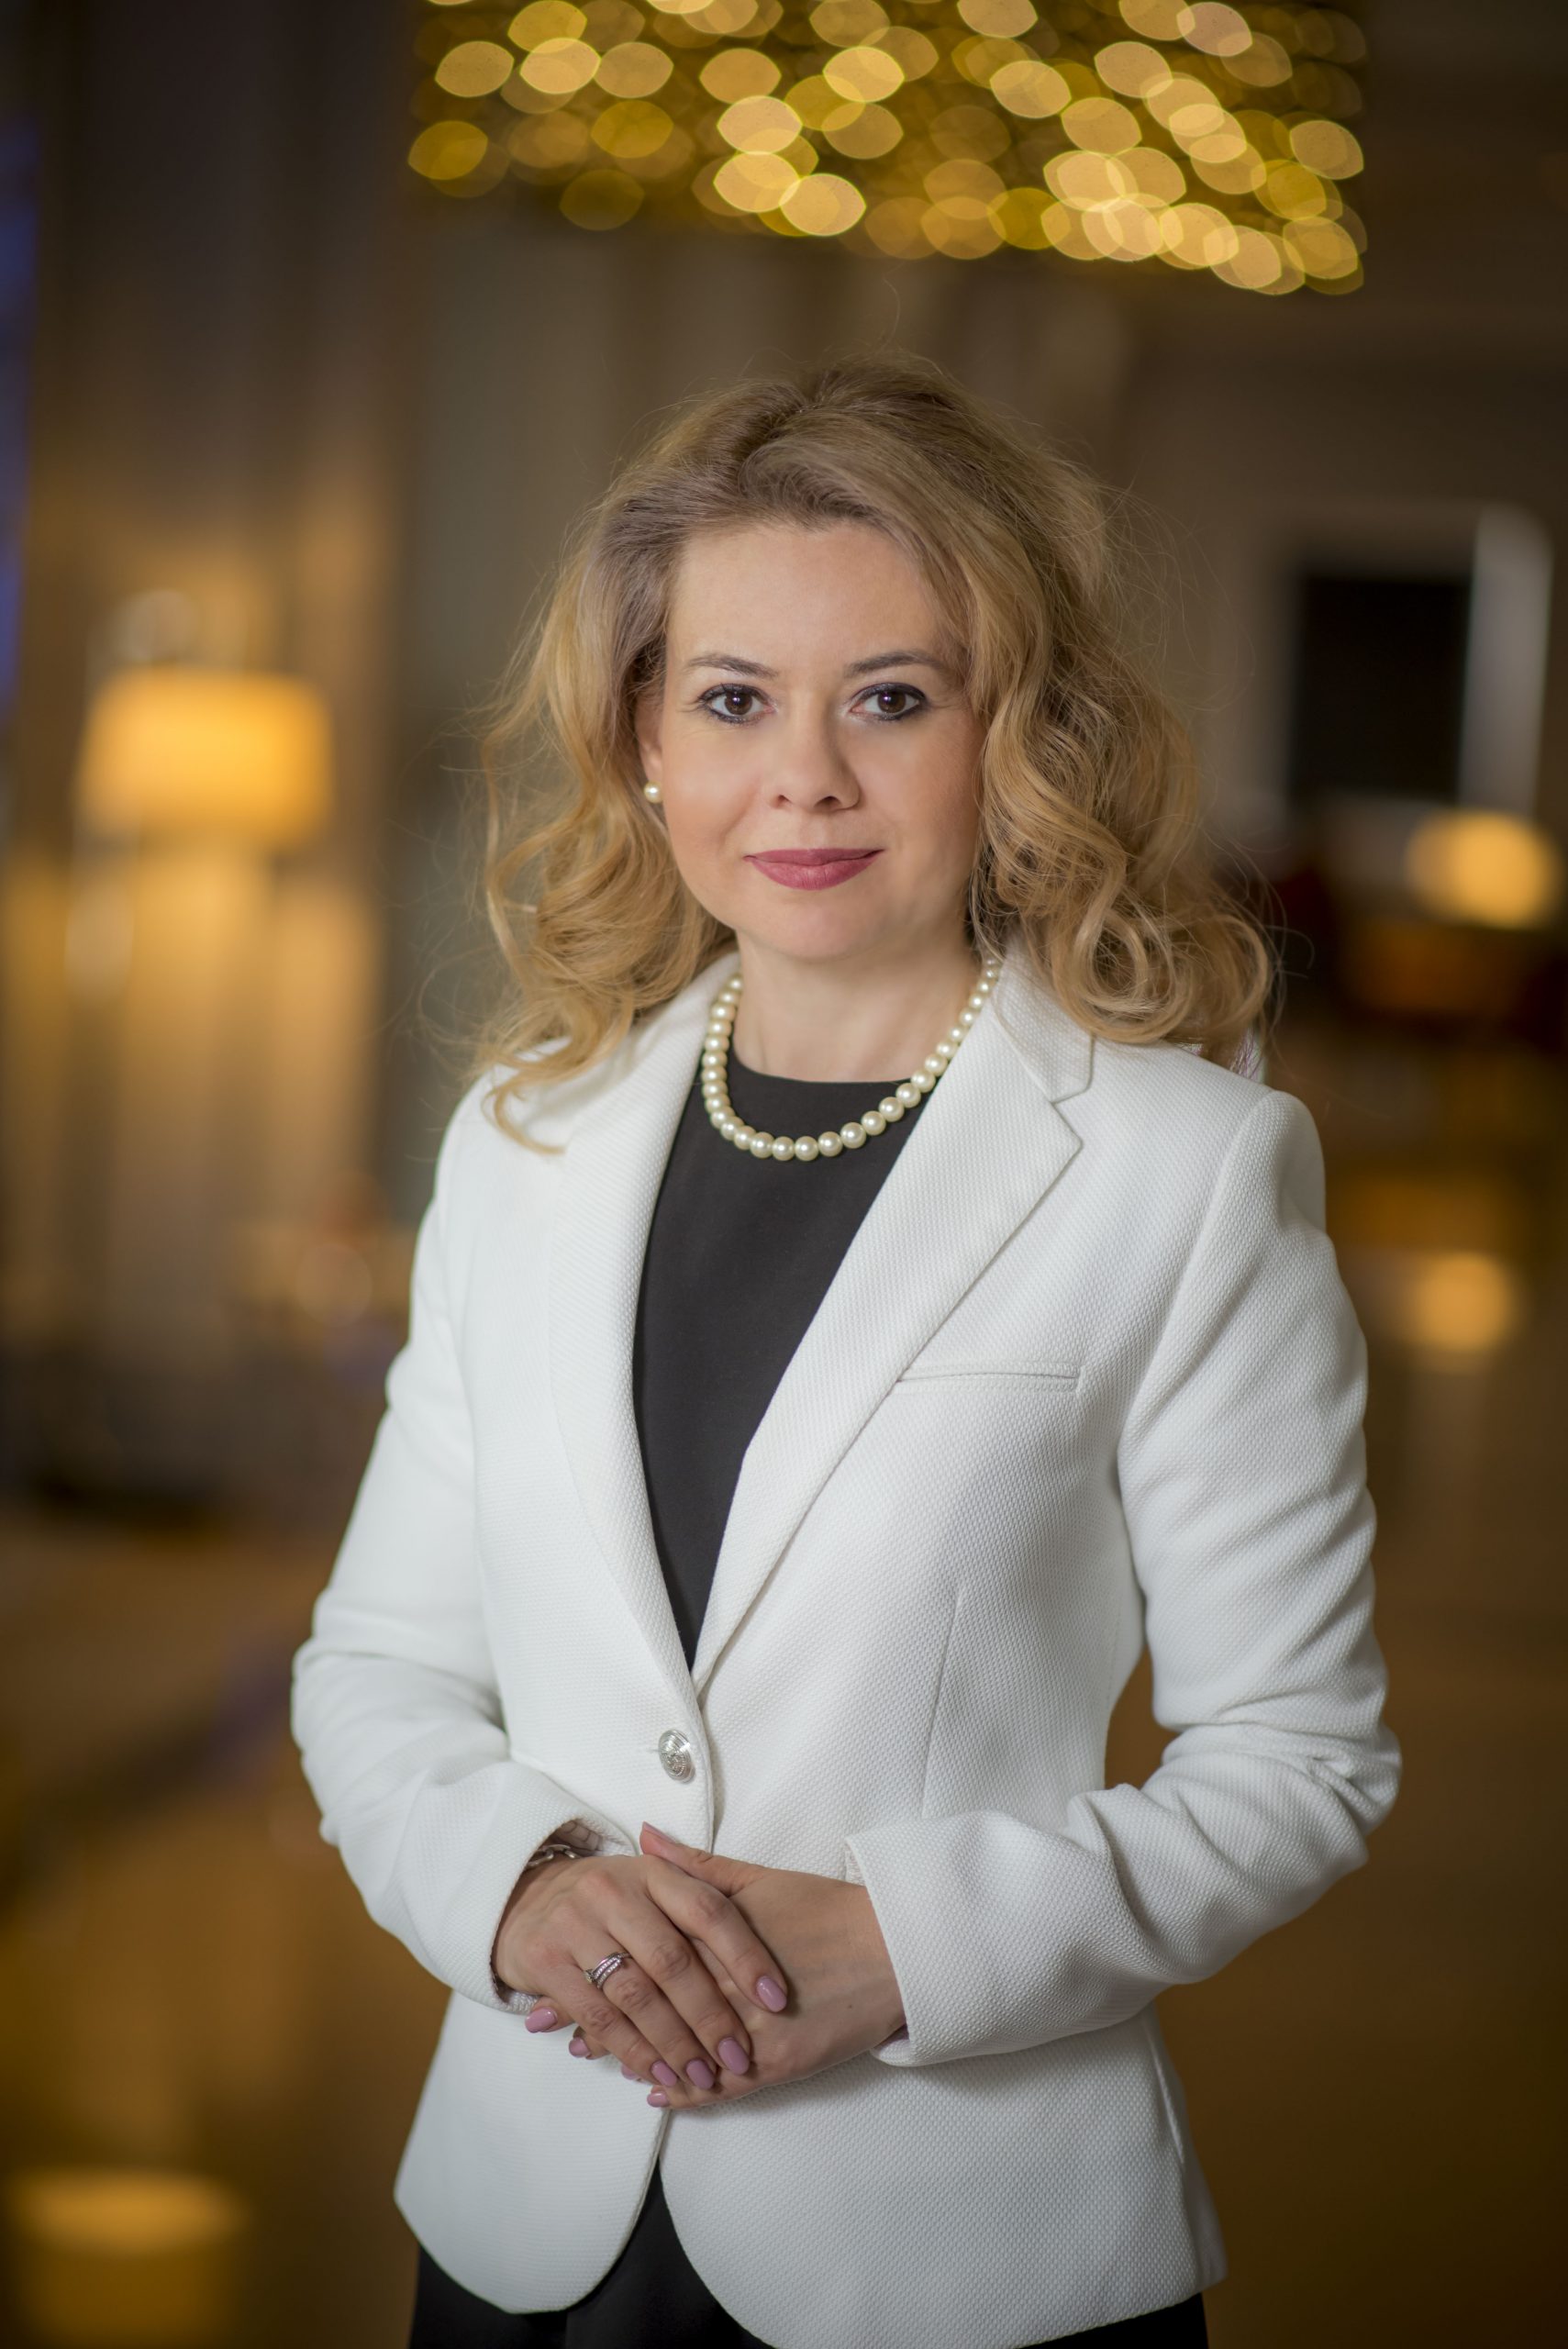 Nordis Group o numește pe Meda Annemarie Vasiliu general manager al hotelului Nordis Mamaia